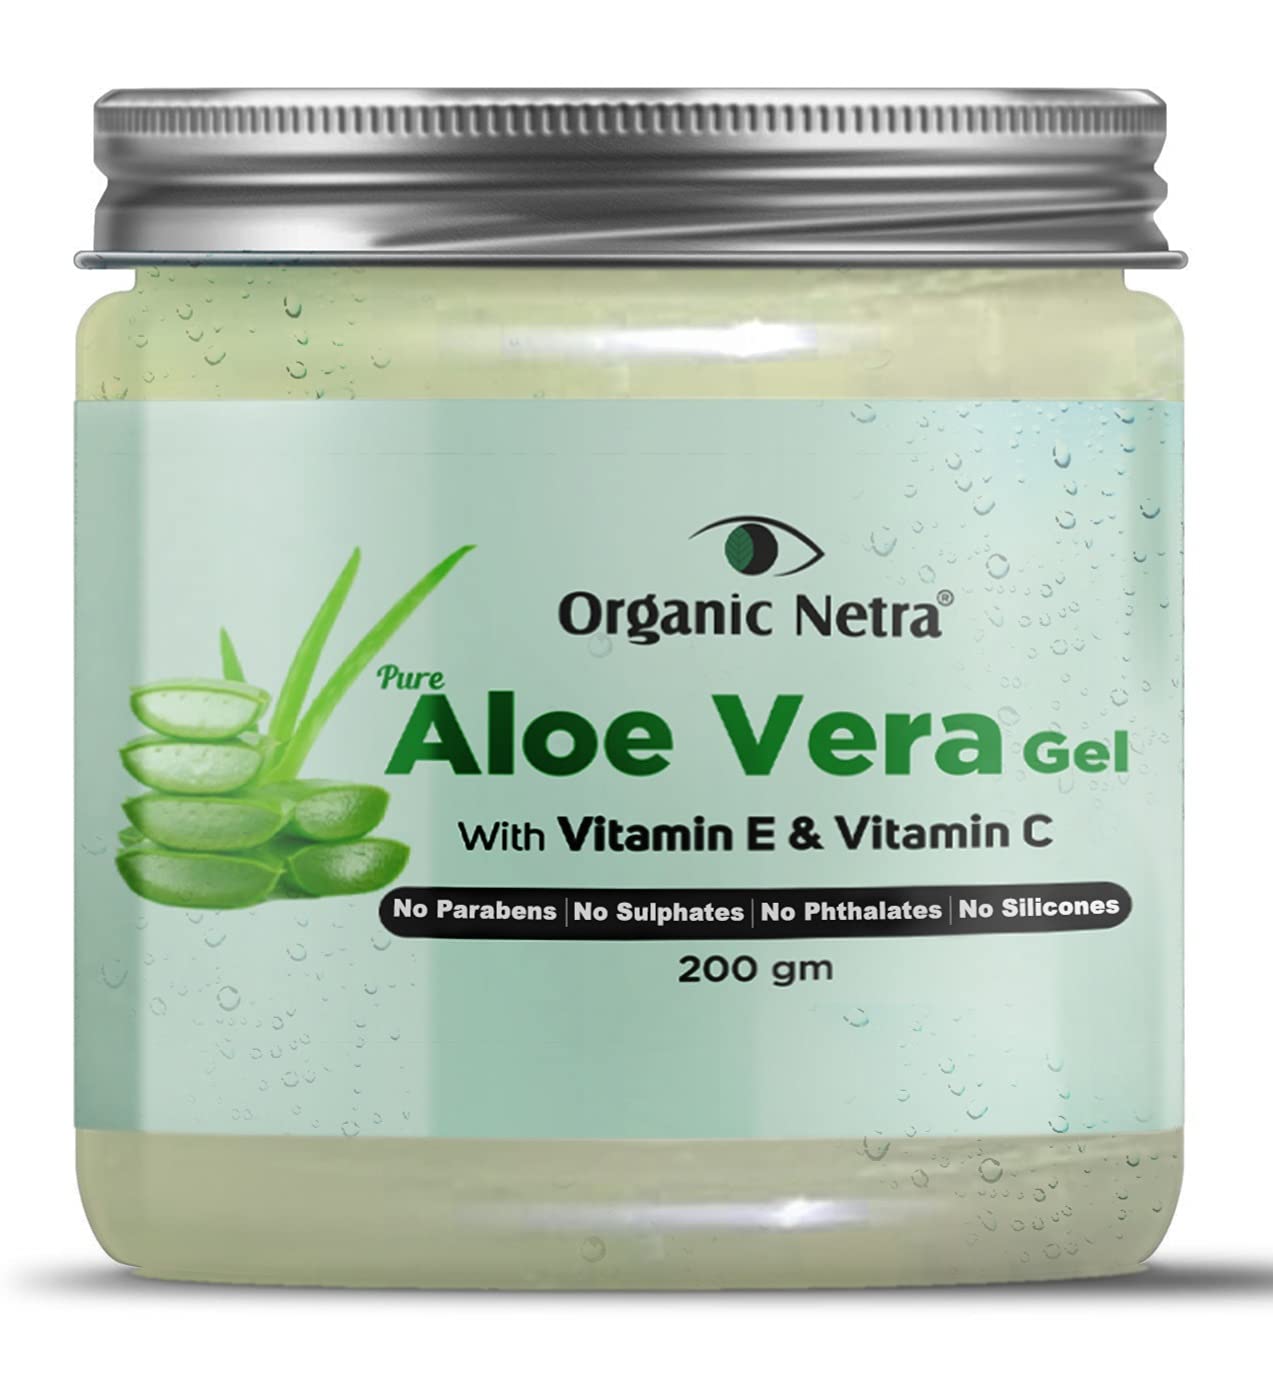 Organic Netra Pure Aloe Vera Gel With Vitamin C E 200gm | India Ayurveda Online